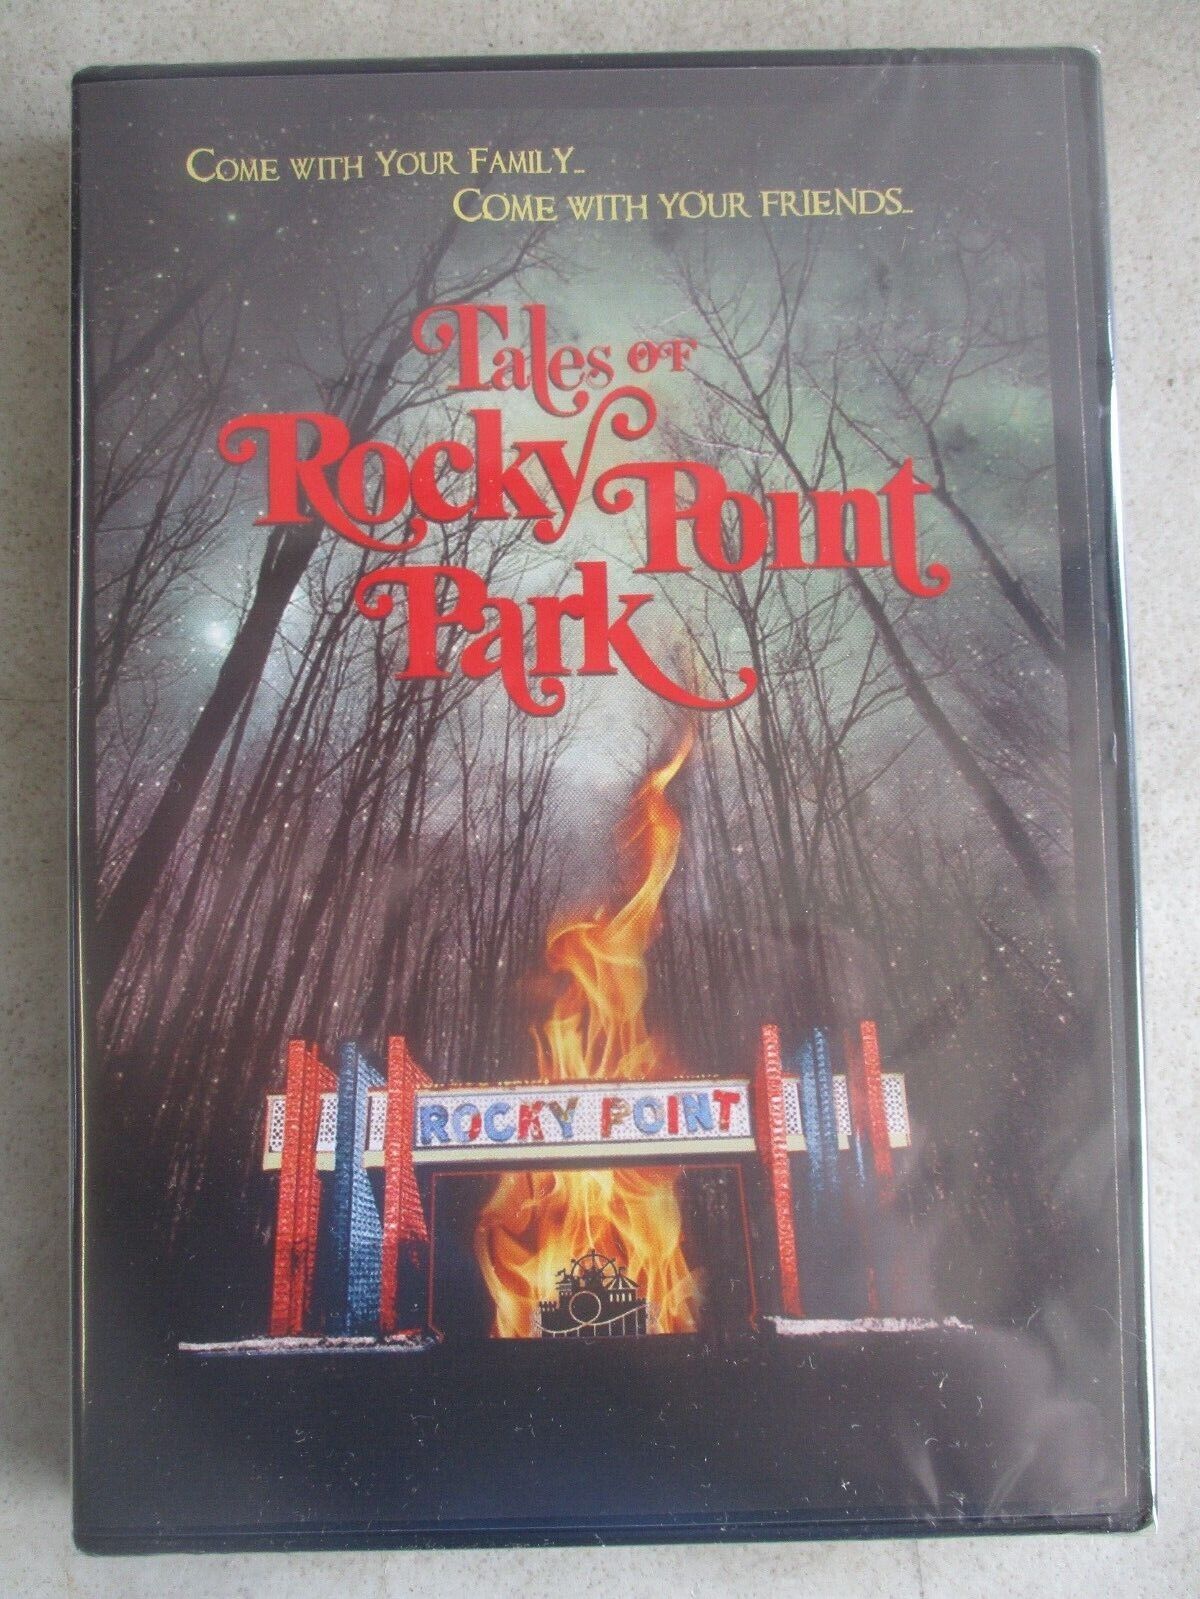 SEALED 2016 TALES OF ROCKY POINT PARK DVD RHODE ISLAND DOCUMENTARY FILM